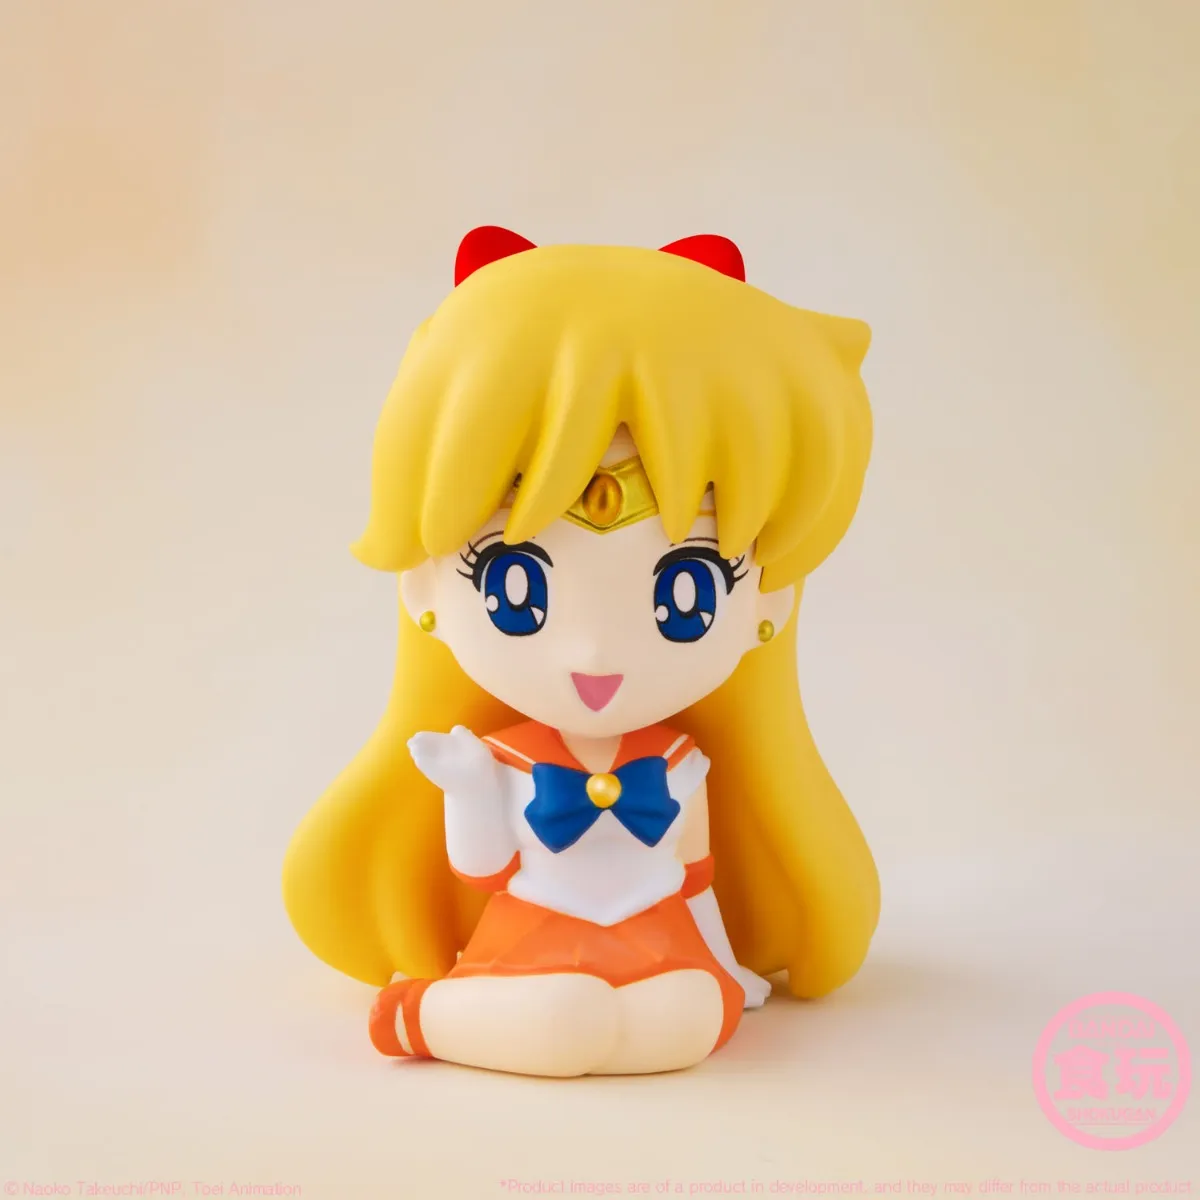 Box of 10 pcs Relaxing Mascot Sailor Moon "Sailor Moon", Bandai Shokugan Relaxing Mascot